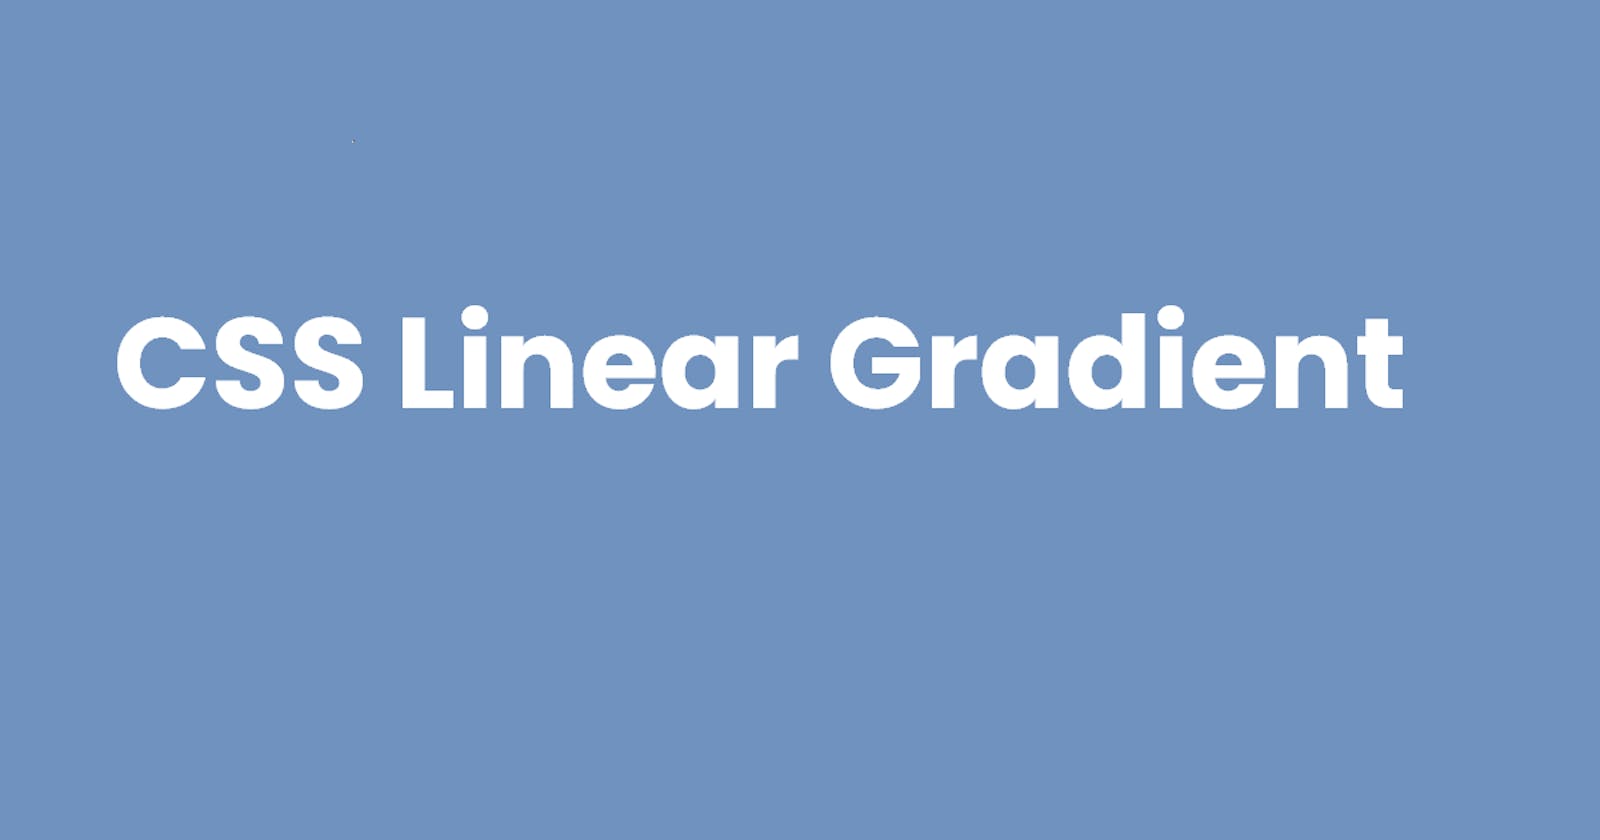 CSS Linear Gradient (Summary)